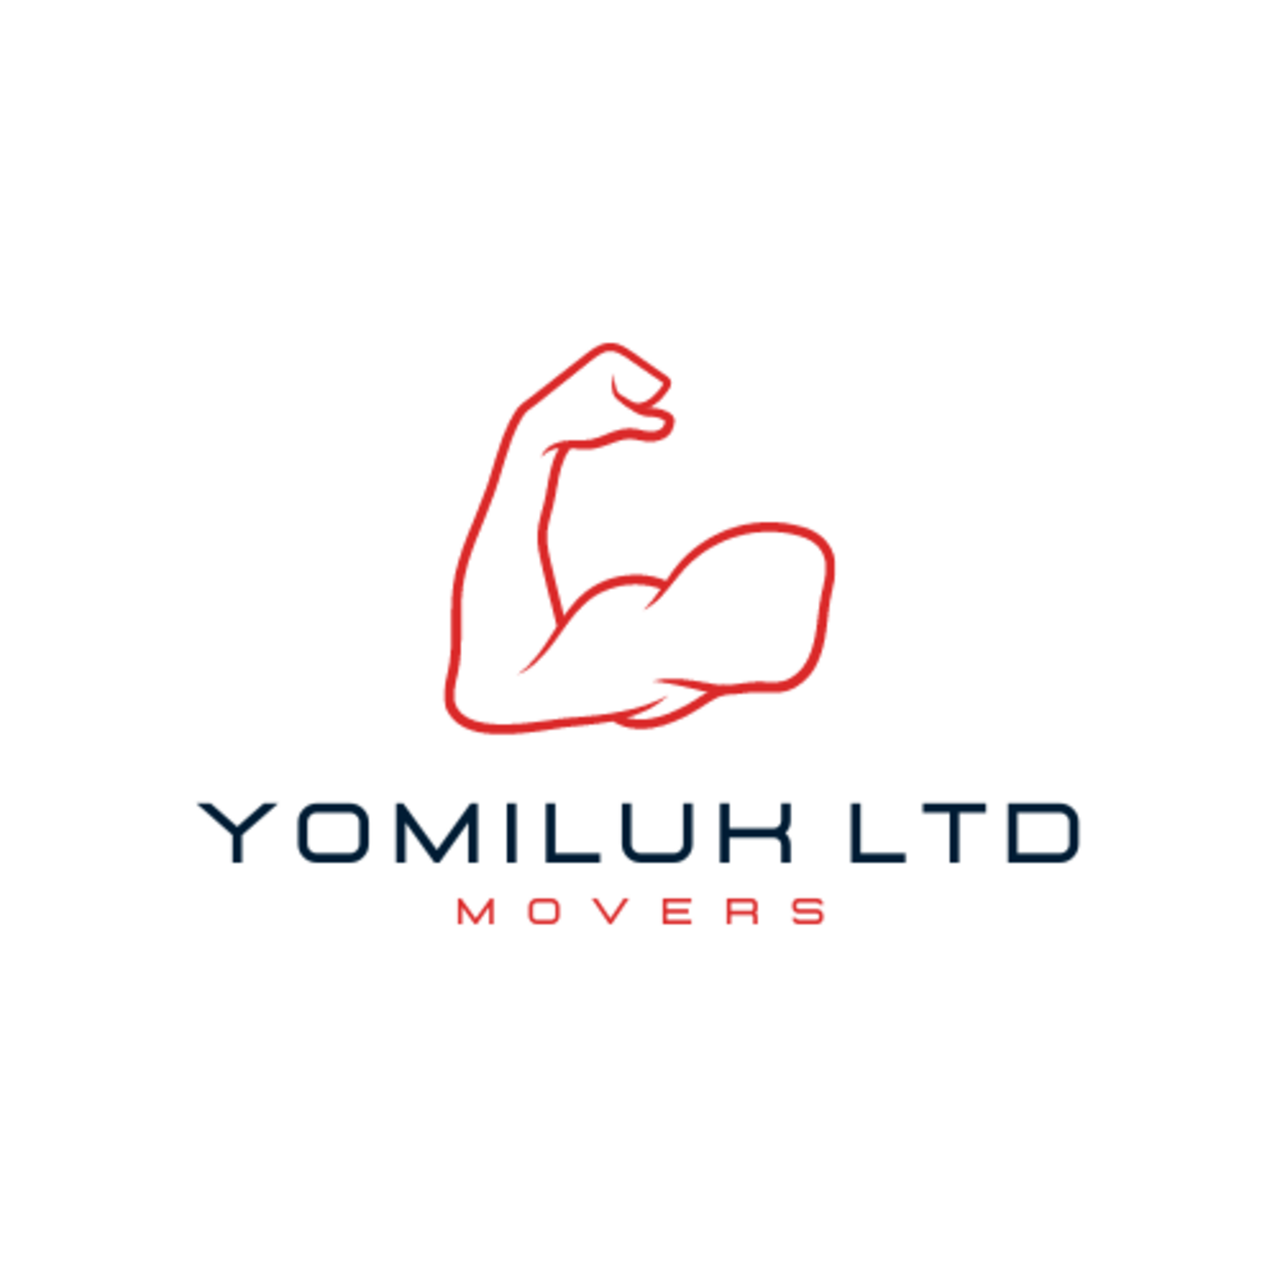  Yomiluk LTD Movers's logo